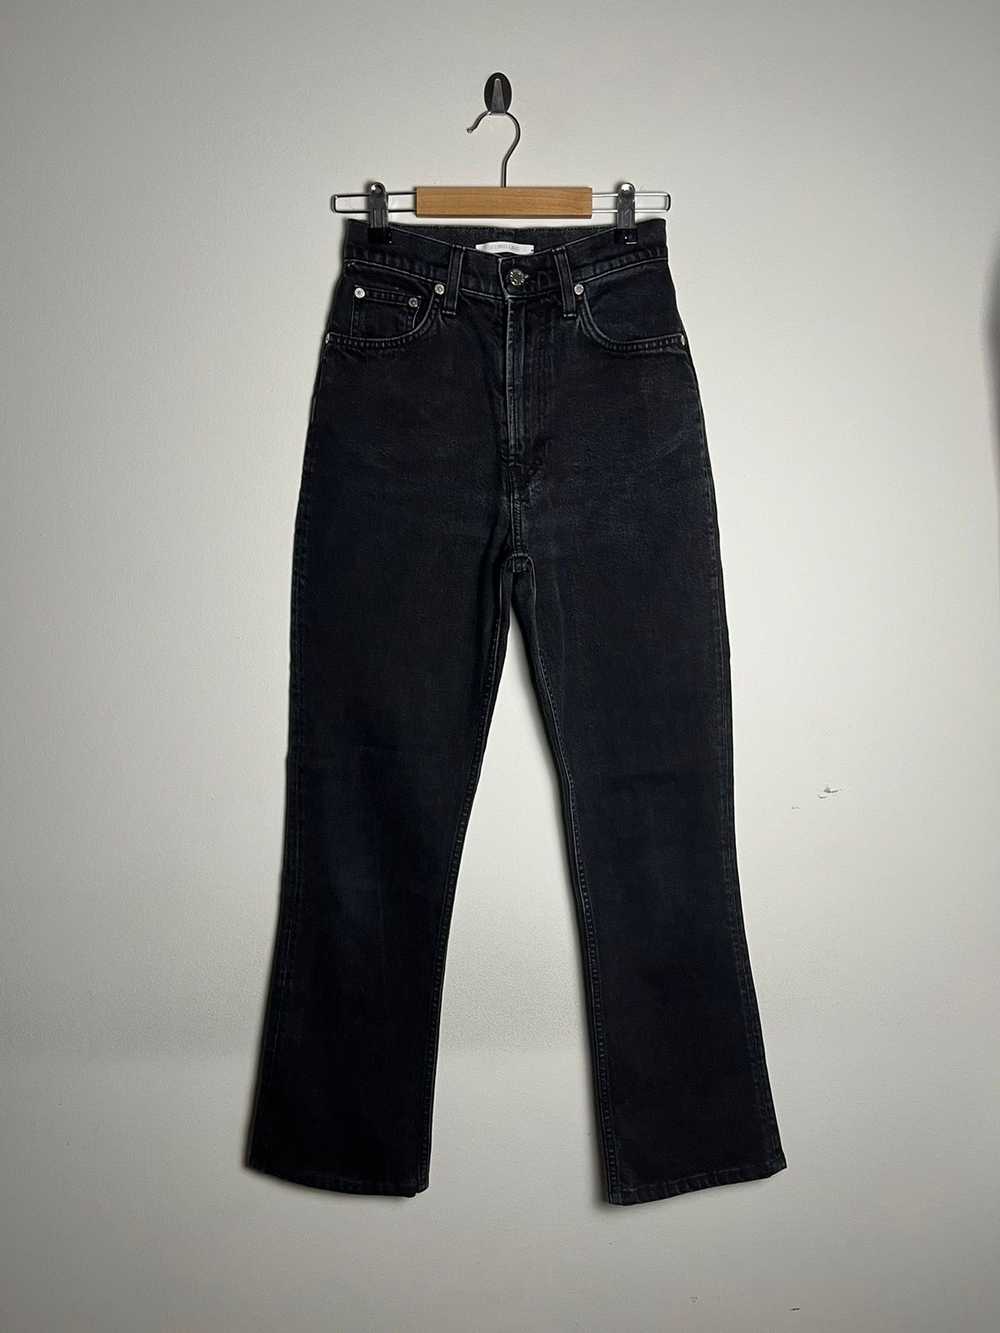 Helmut Lang Helmut Lang Black Hi Bootcut Jeans - image 1